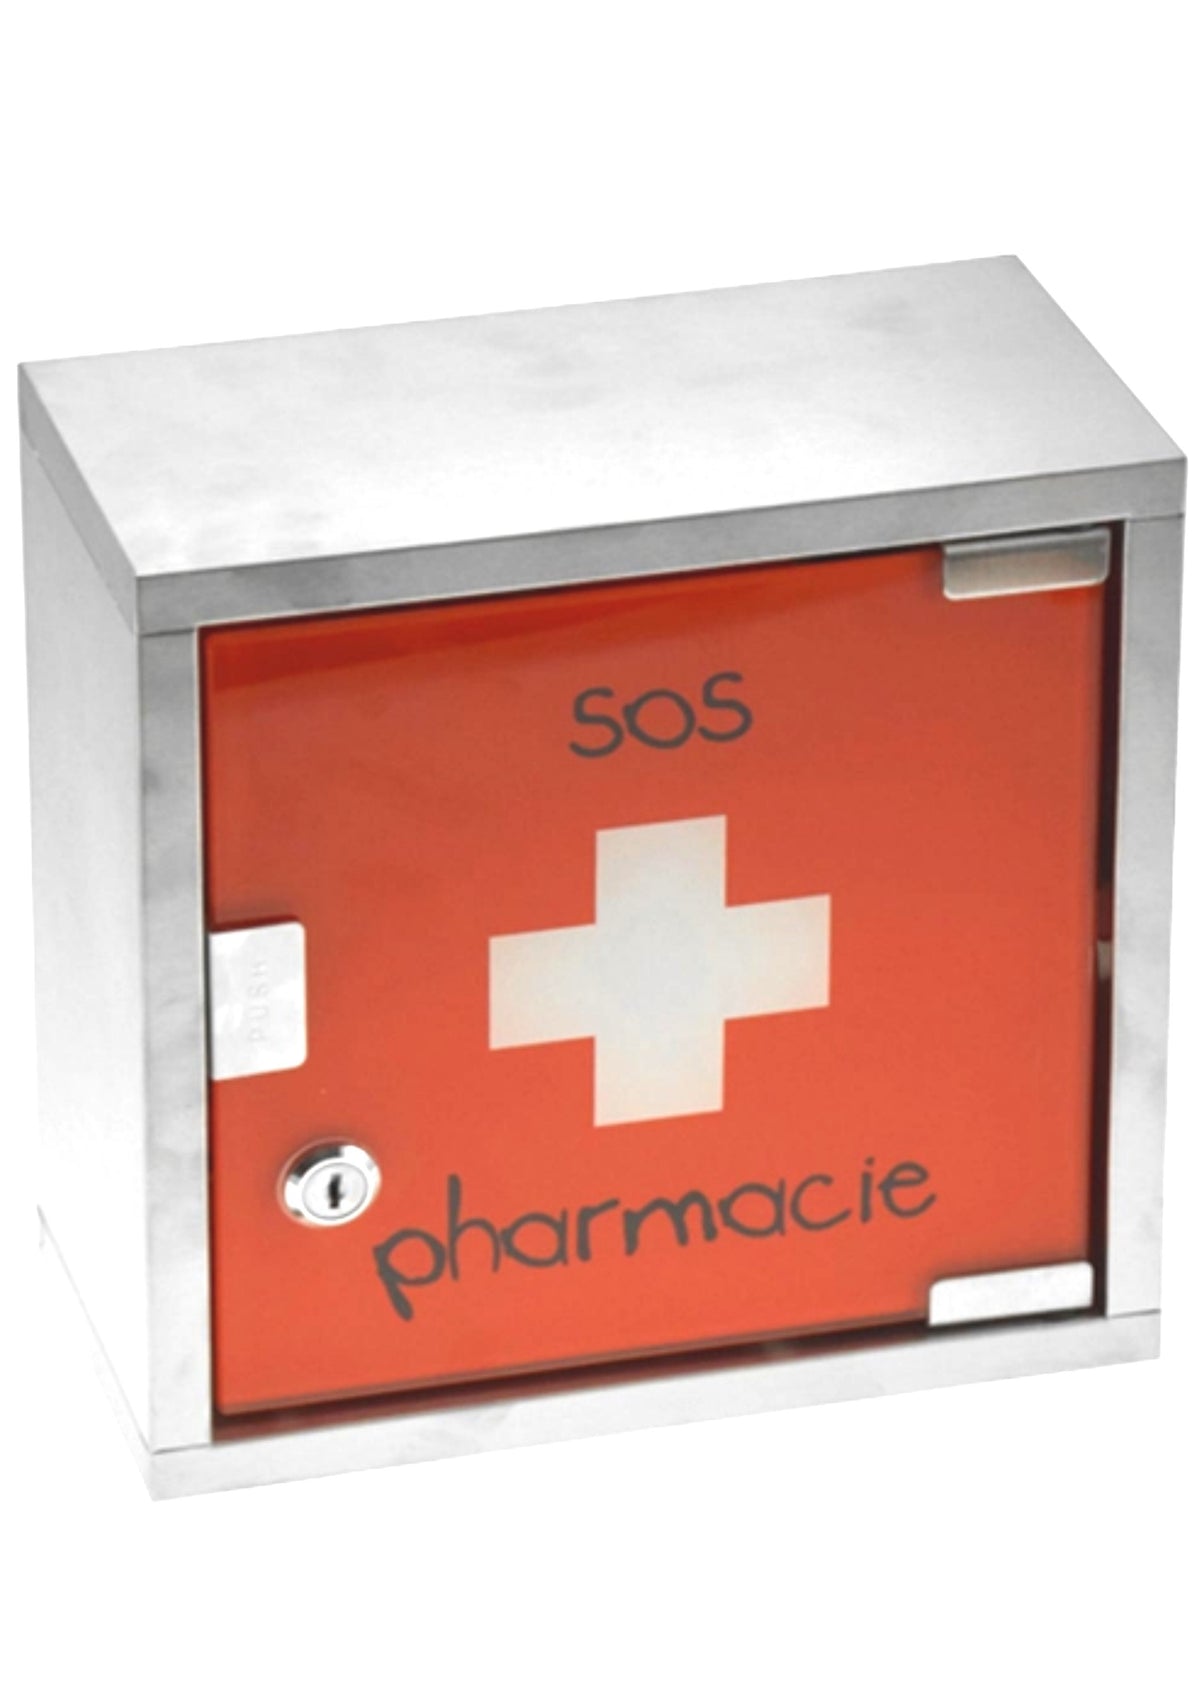 Grande boîte à pharmacie en métal rouge - 20x32x20 - ON RANGE TOUT